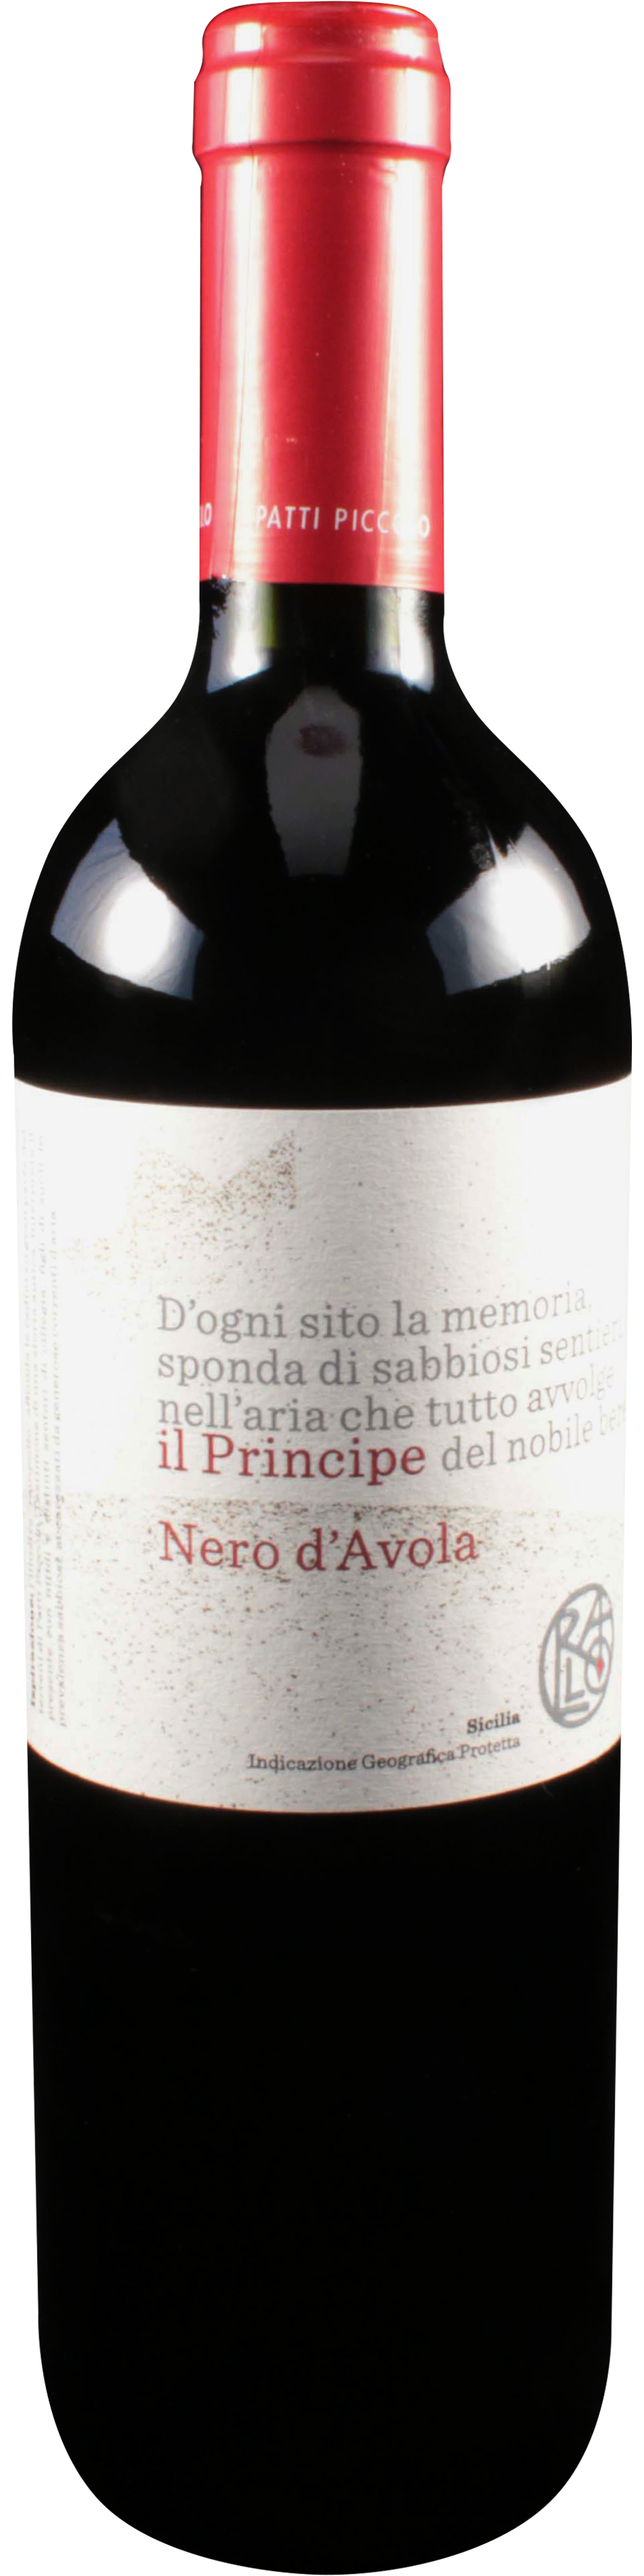 Bottle shot of 2011 Il Principe Nero d'Avola